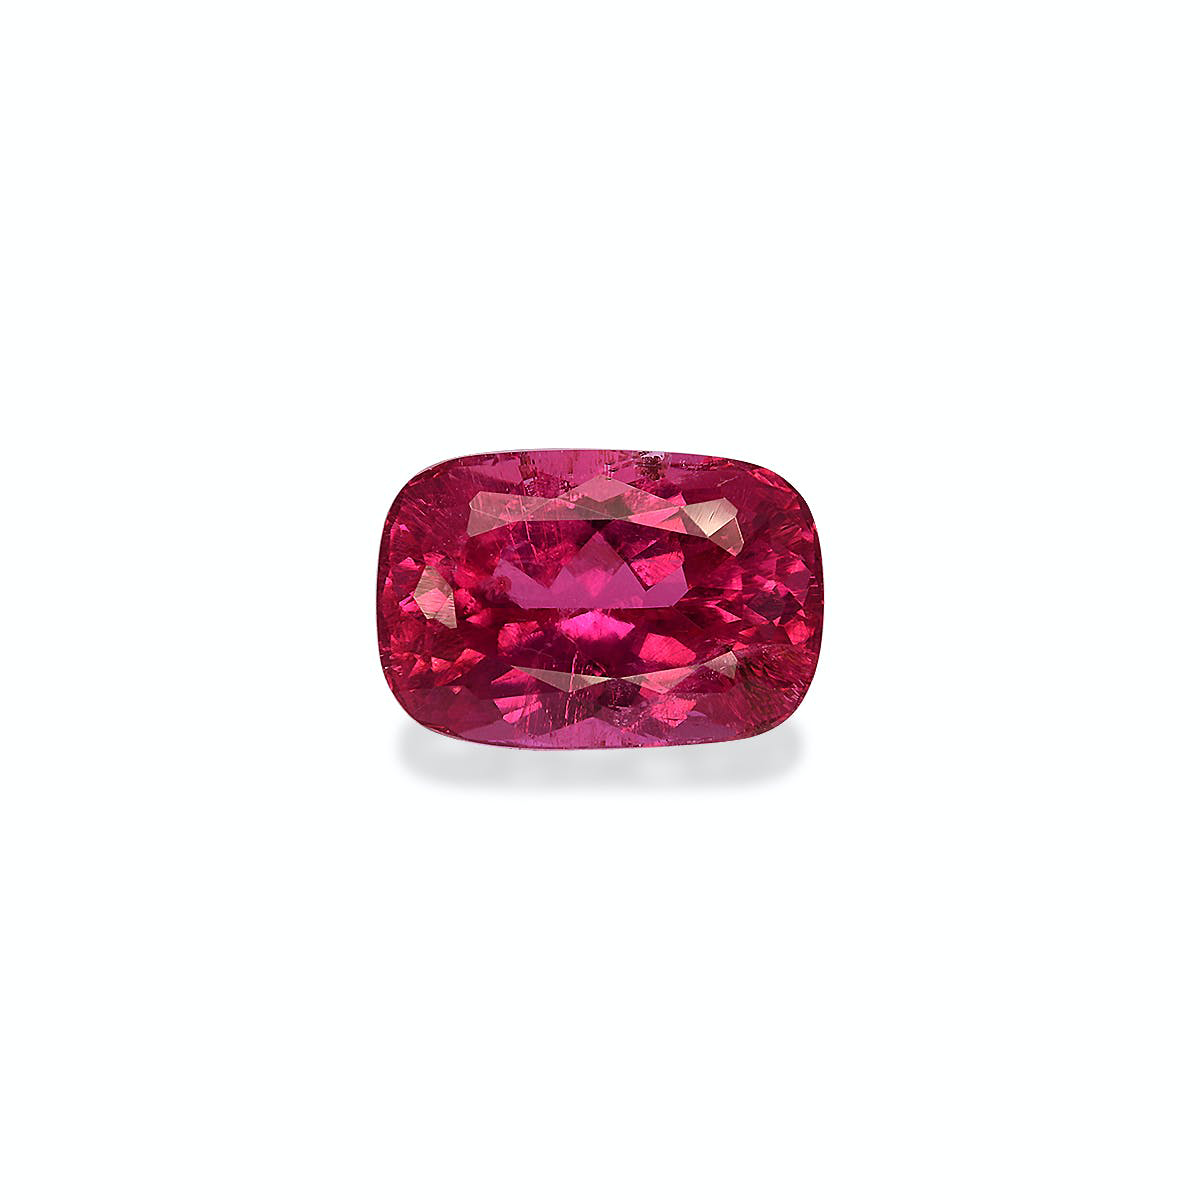 Picture of Vivid Pink Rubellite Tourmaline 5.82ct (RL1213)